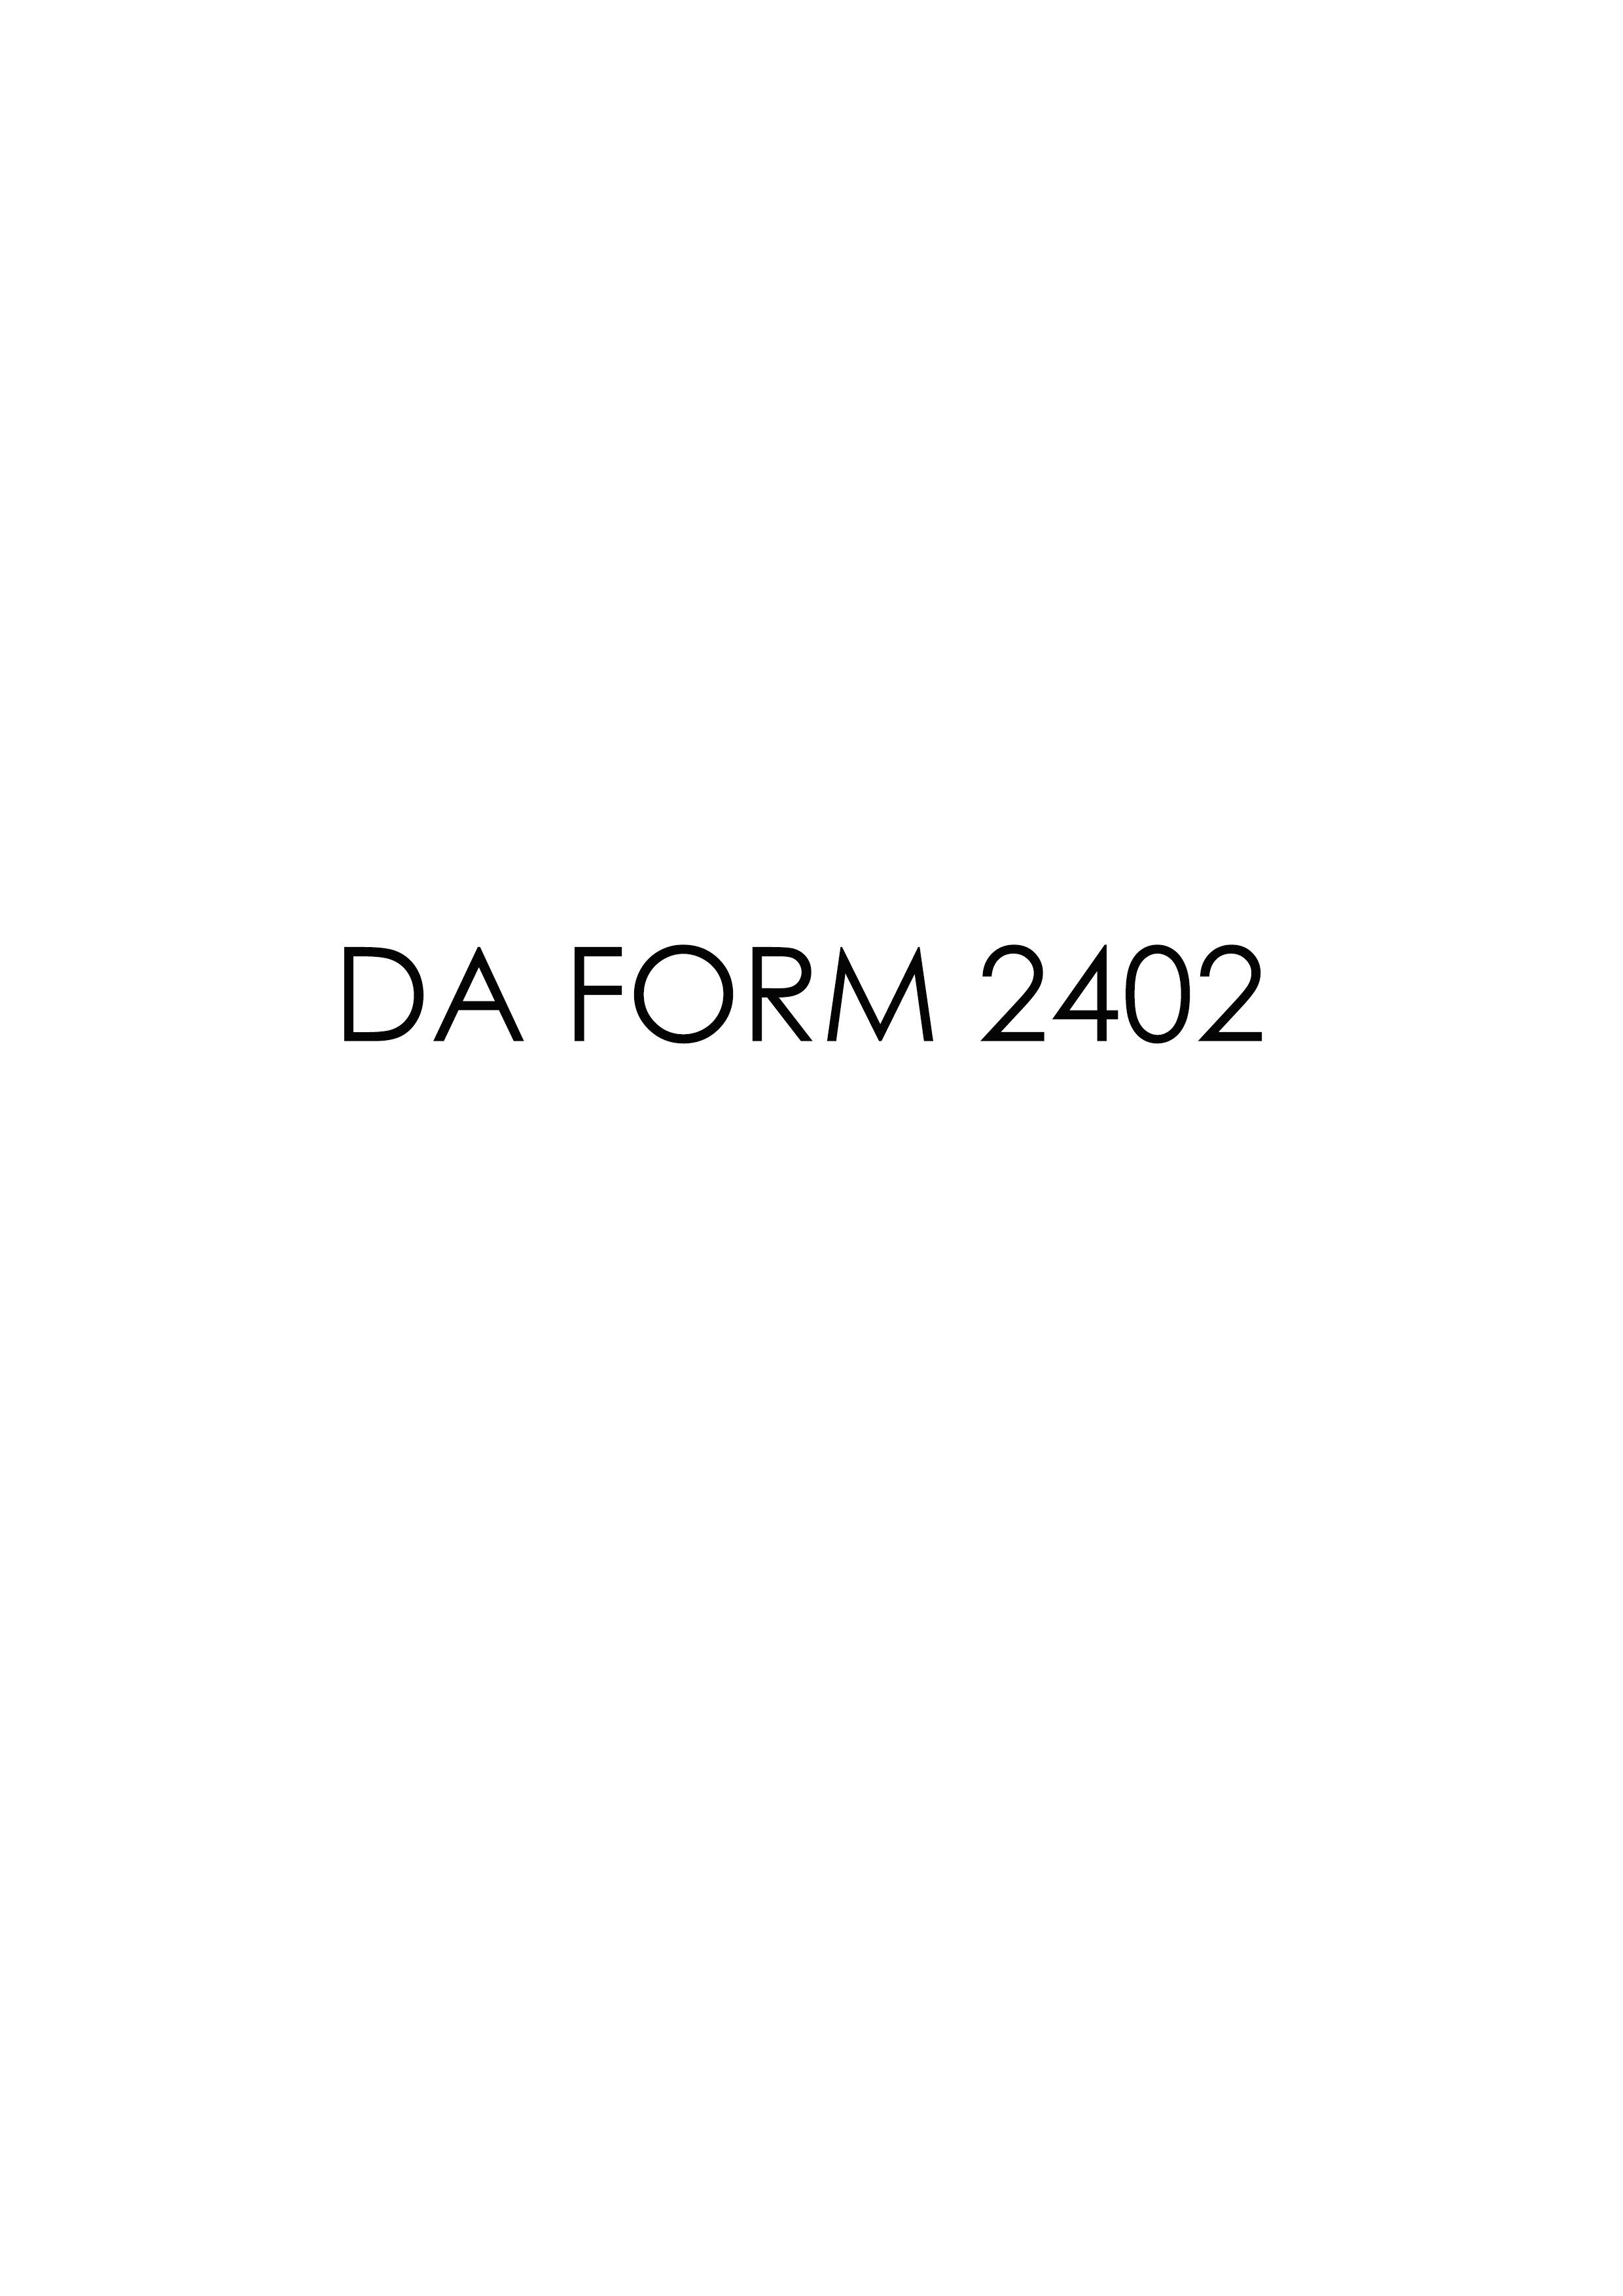 da Form 2402 fillable